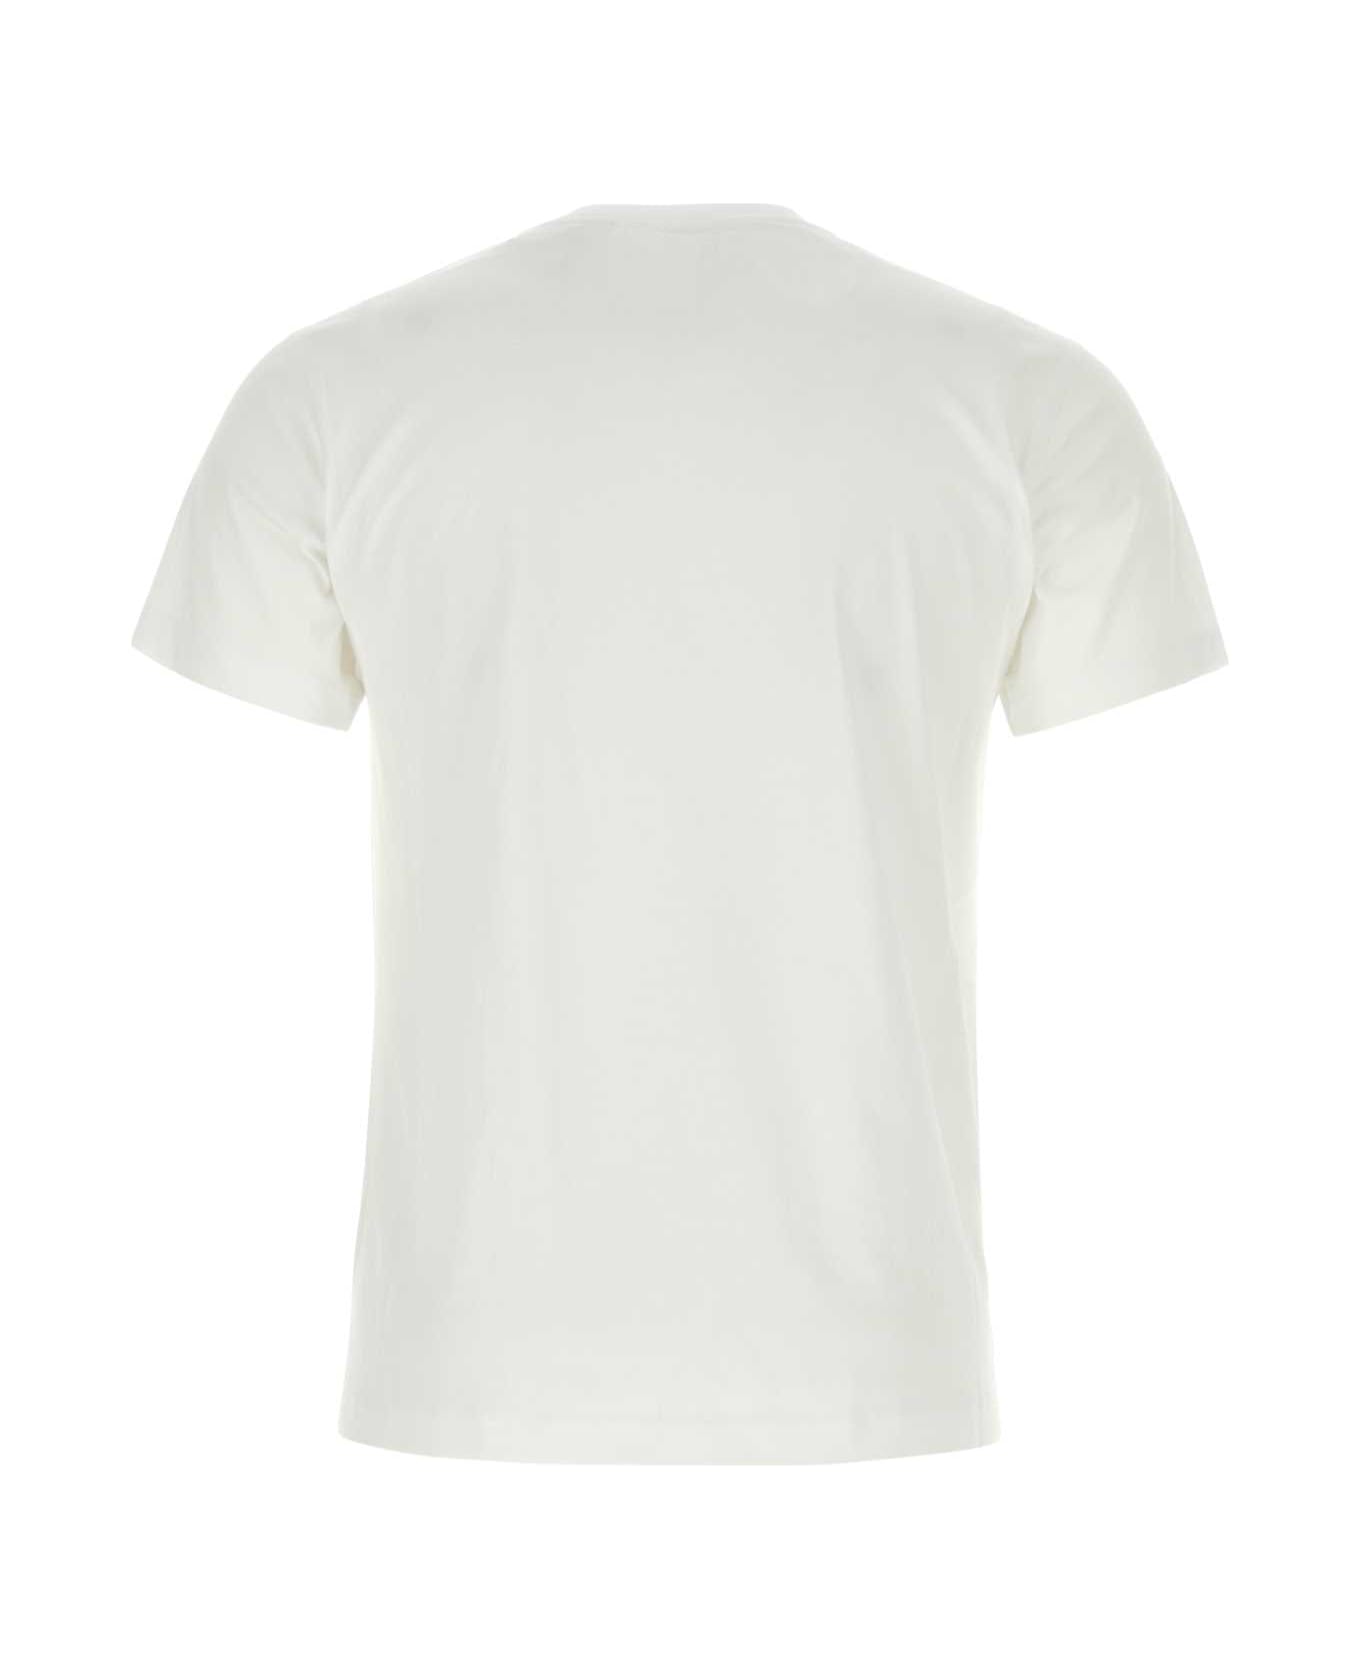 Burberry White Cotton T-shirt - WHITE